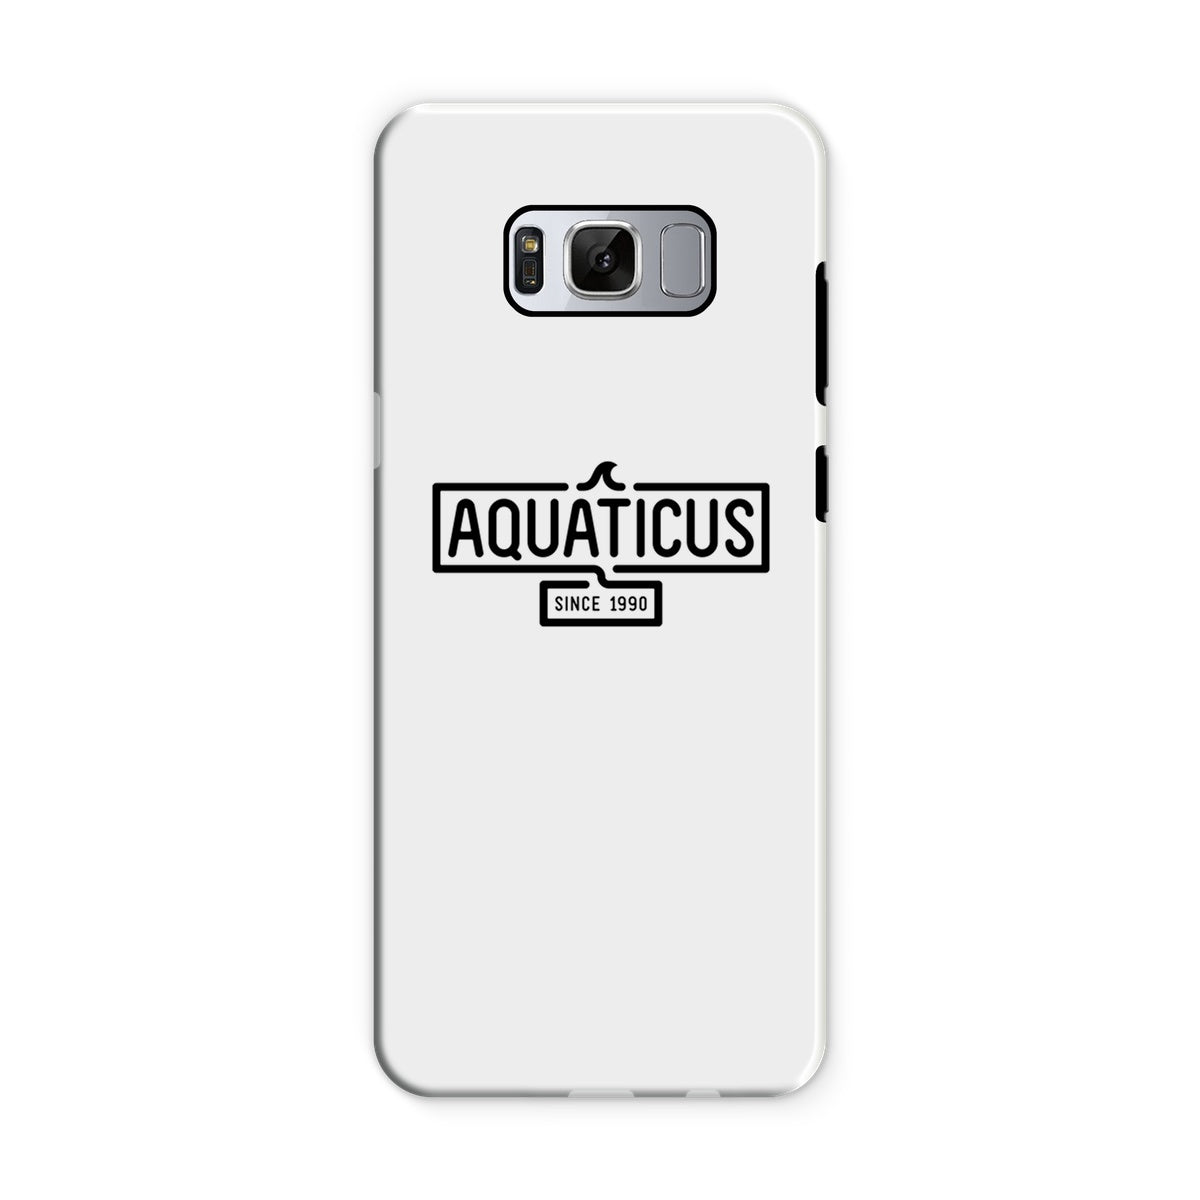 AQUA - 01- Aquaticus - Capa de telefone resistente